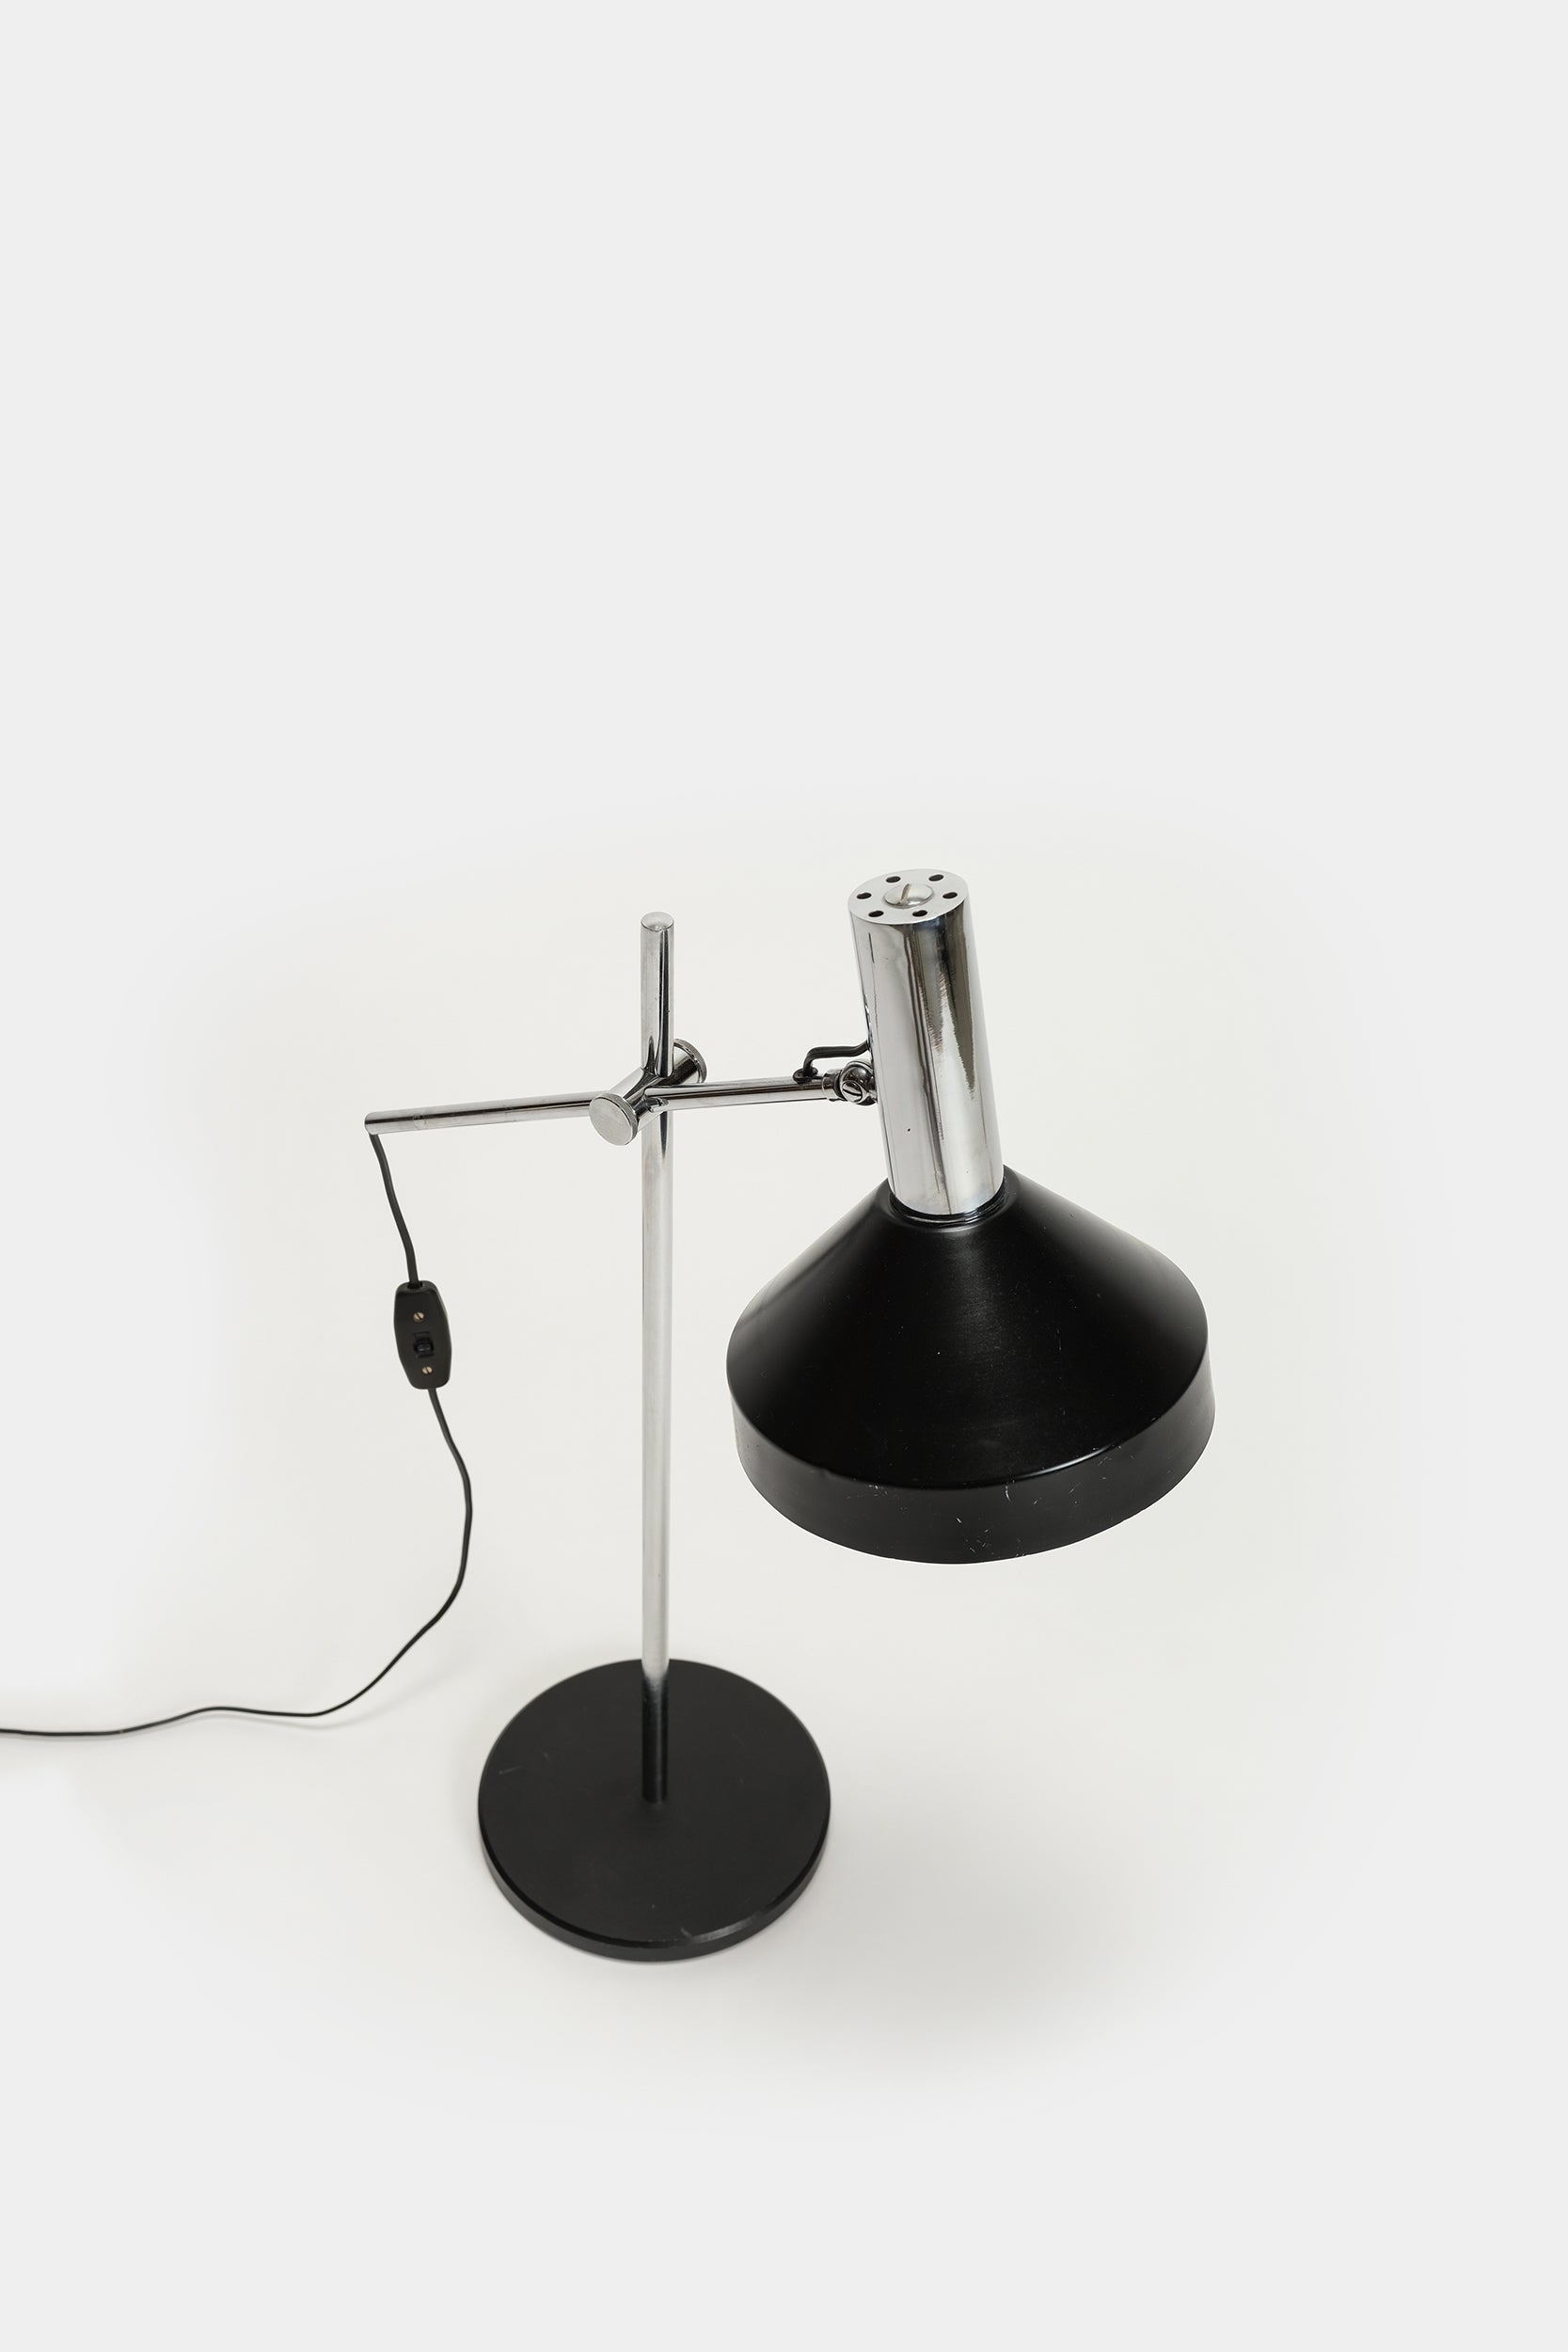 Swiss table lamp, aluminum, Swiss International, 50s